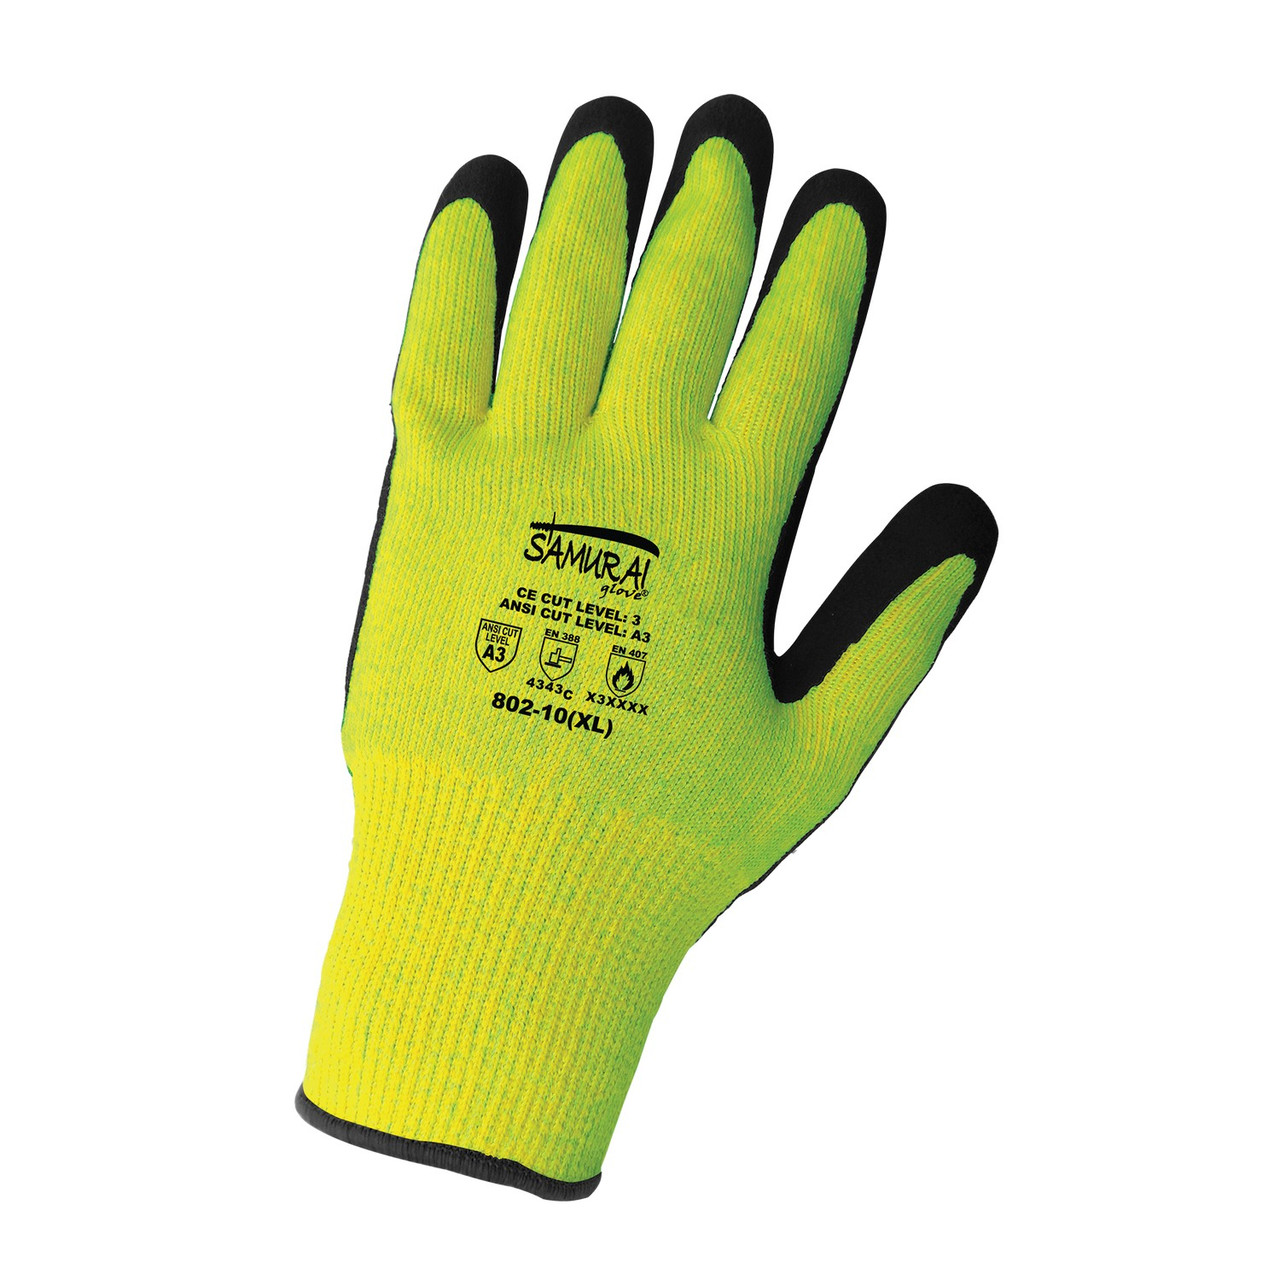 Level 4 Cut Resistant Gloves - Samurai Glove High-Visibility Gloves